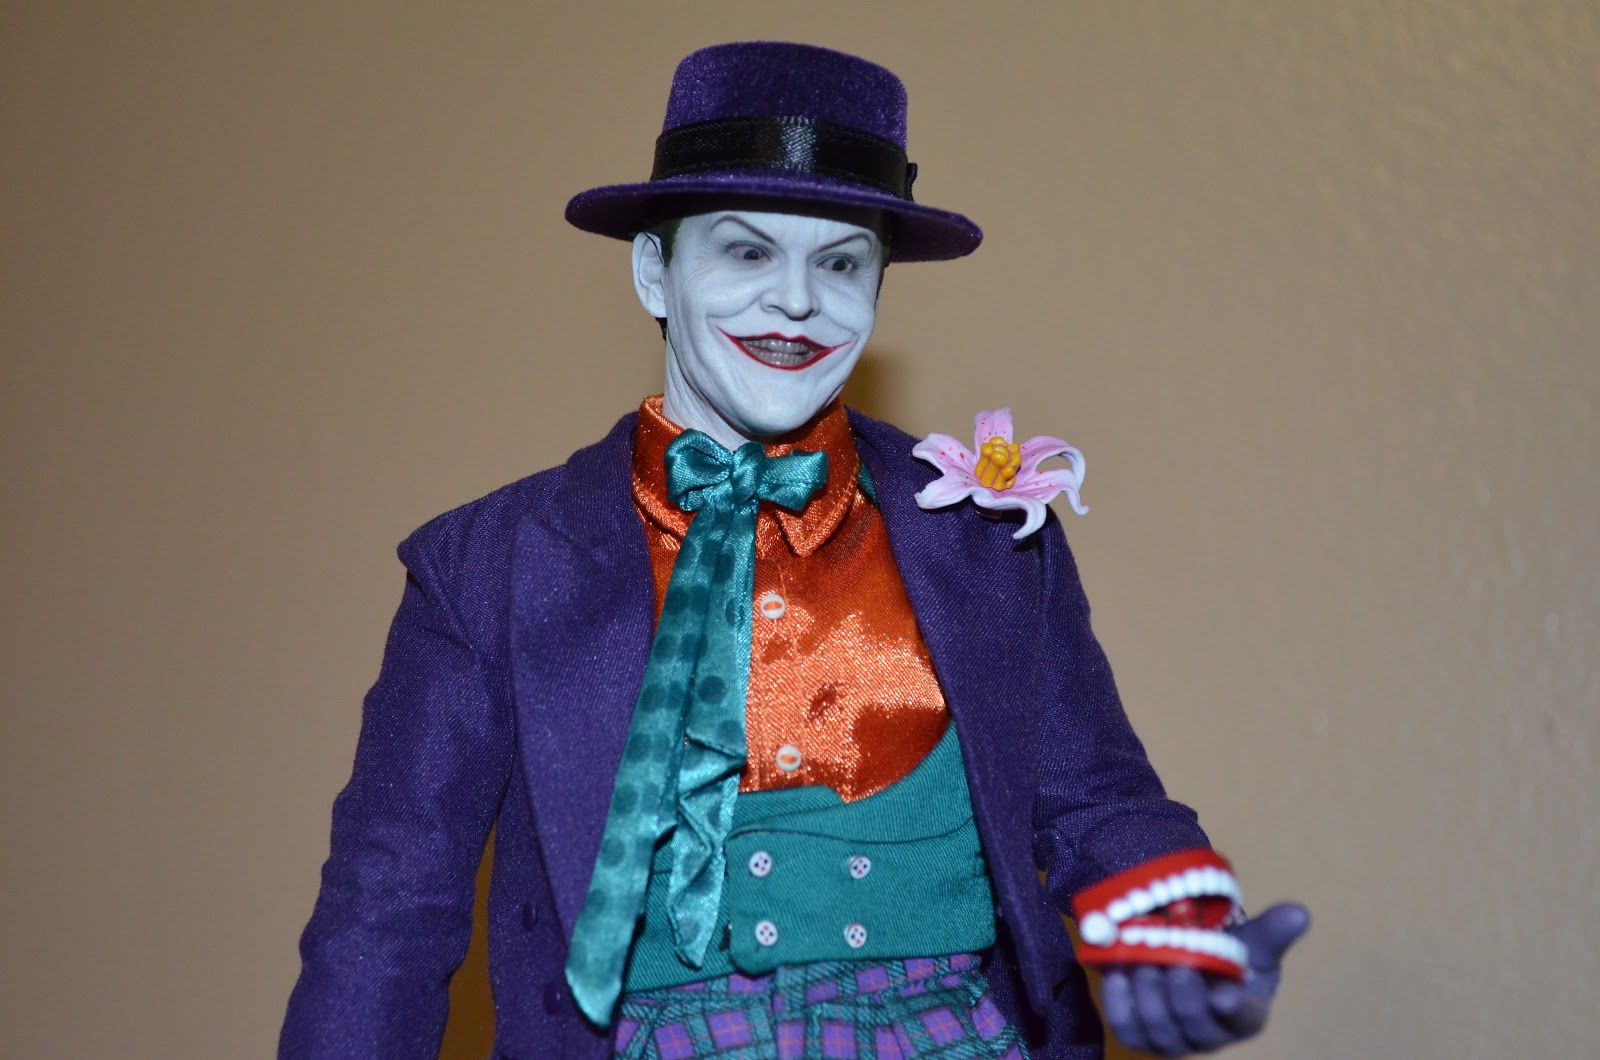 TheEvilEmpire: Hot Toys Jack Nicholson Joker Sixth Scale Figure (DX Series)